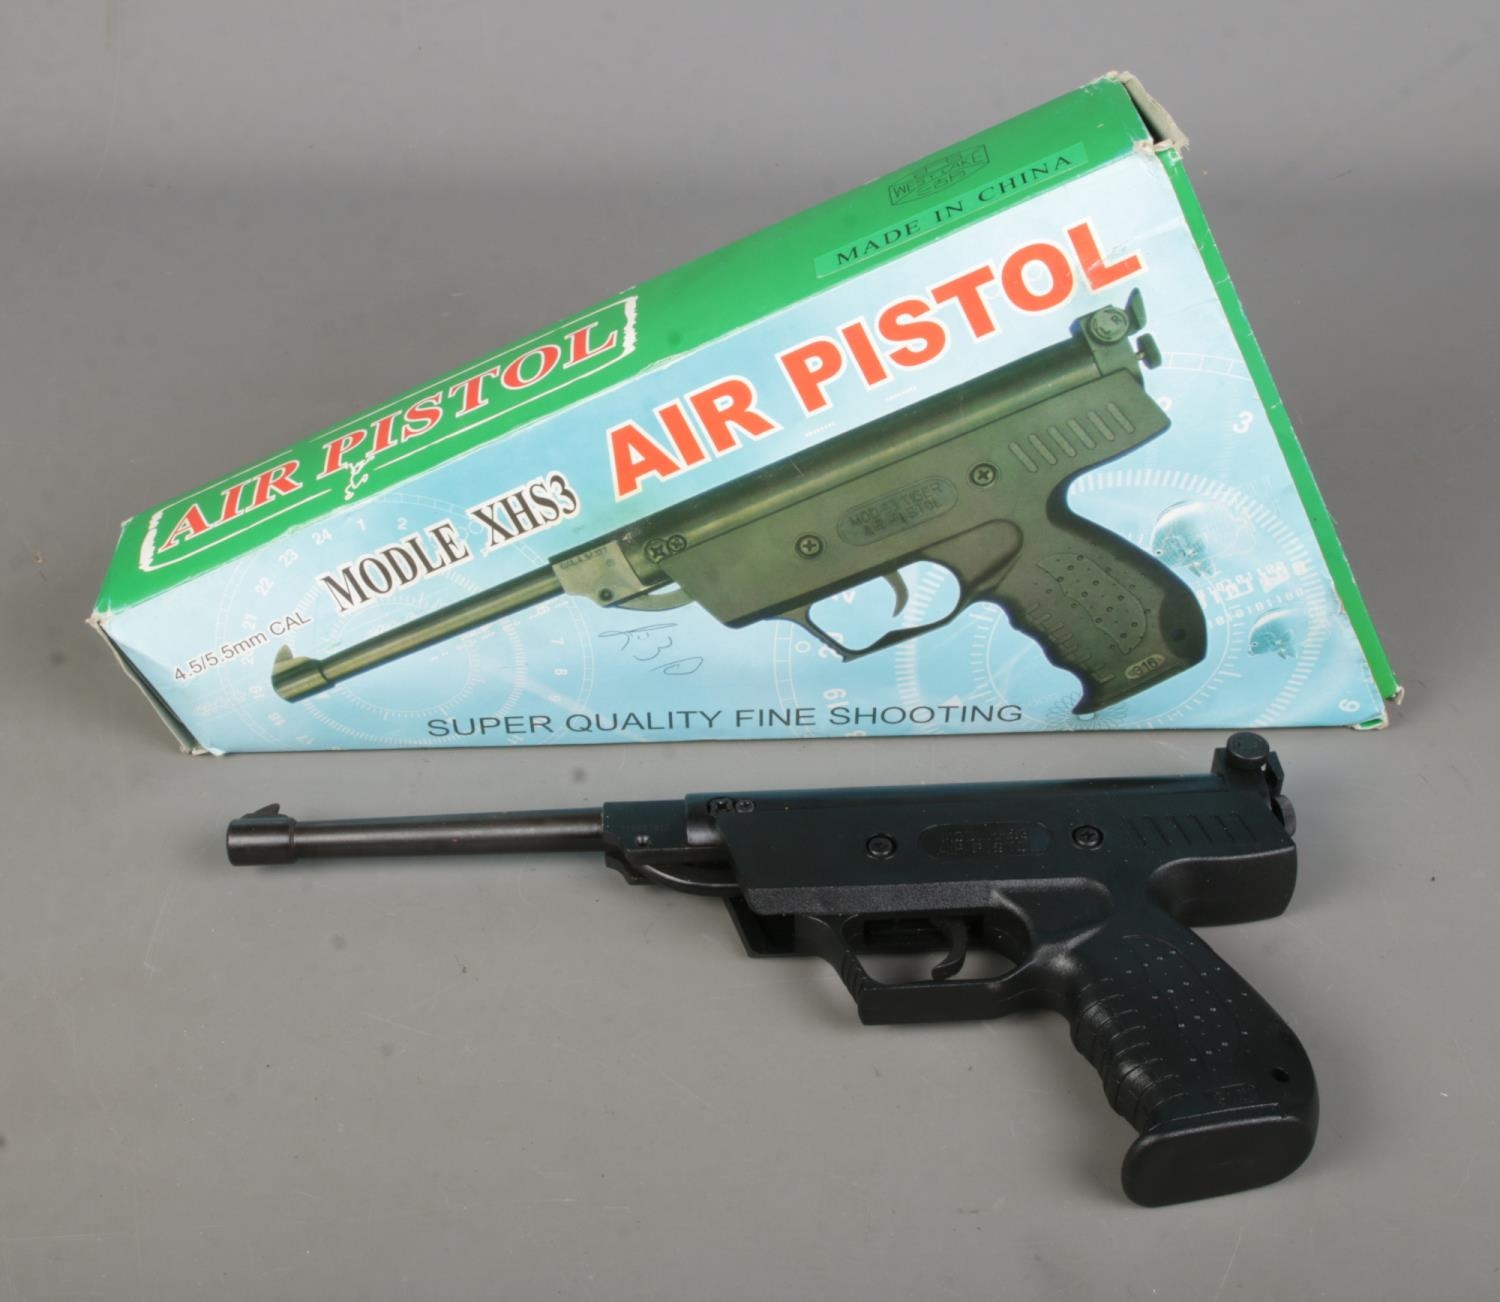 An SMK Westlake model XHS3 .22 air pistol, with original box.